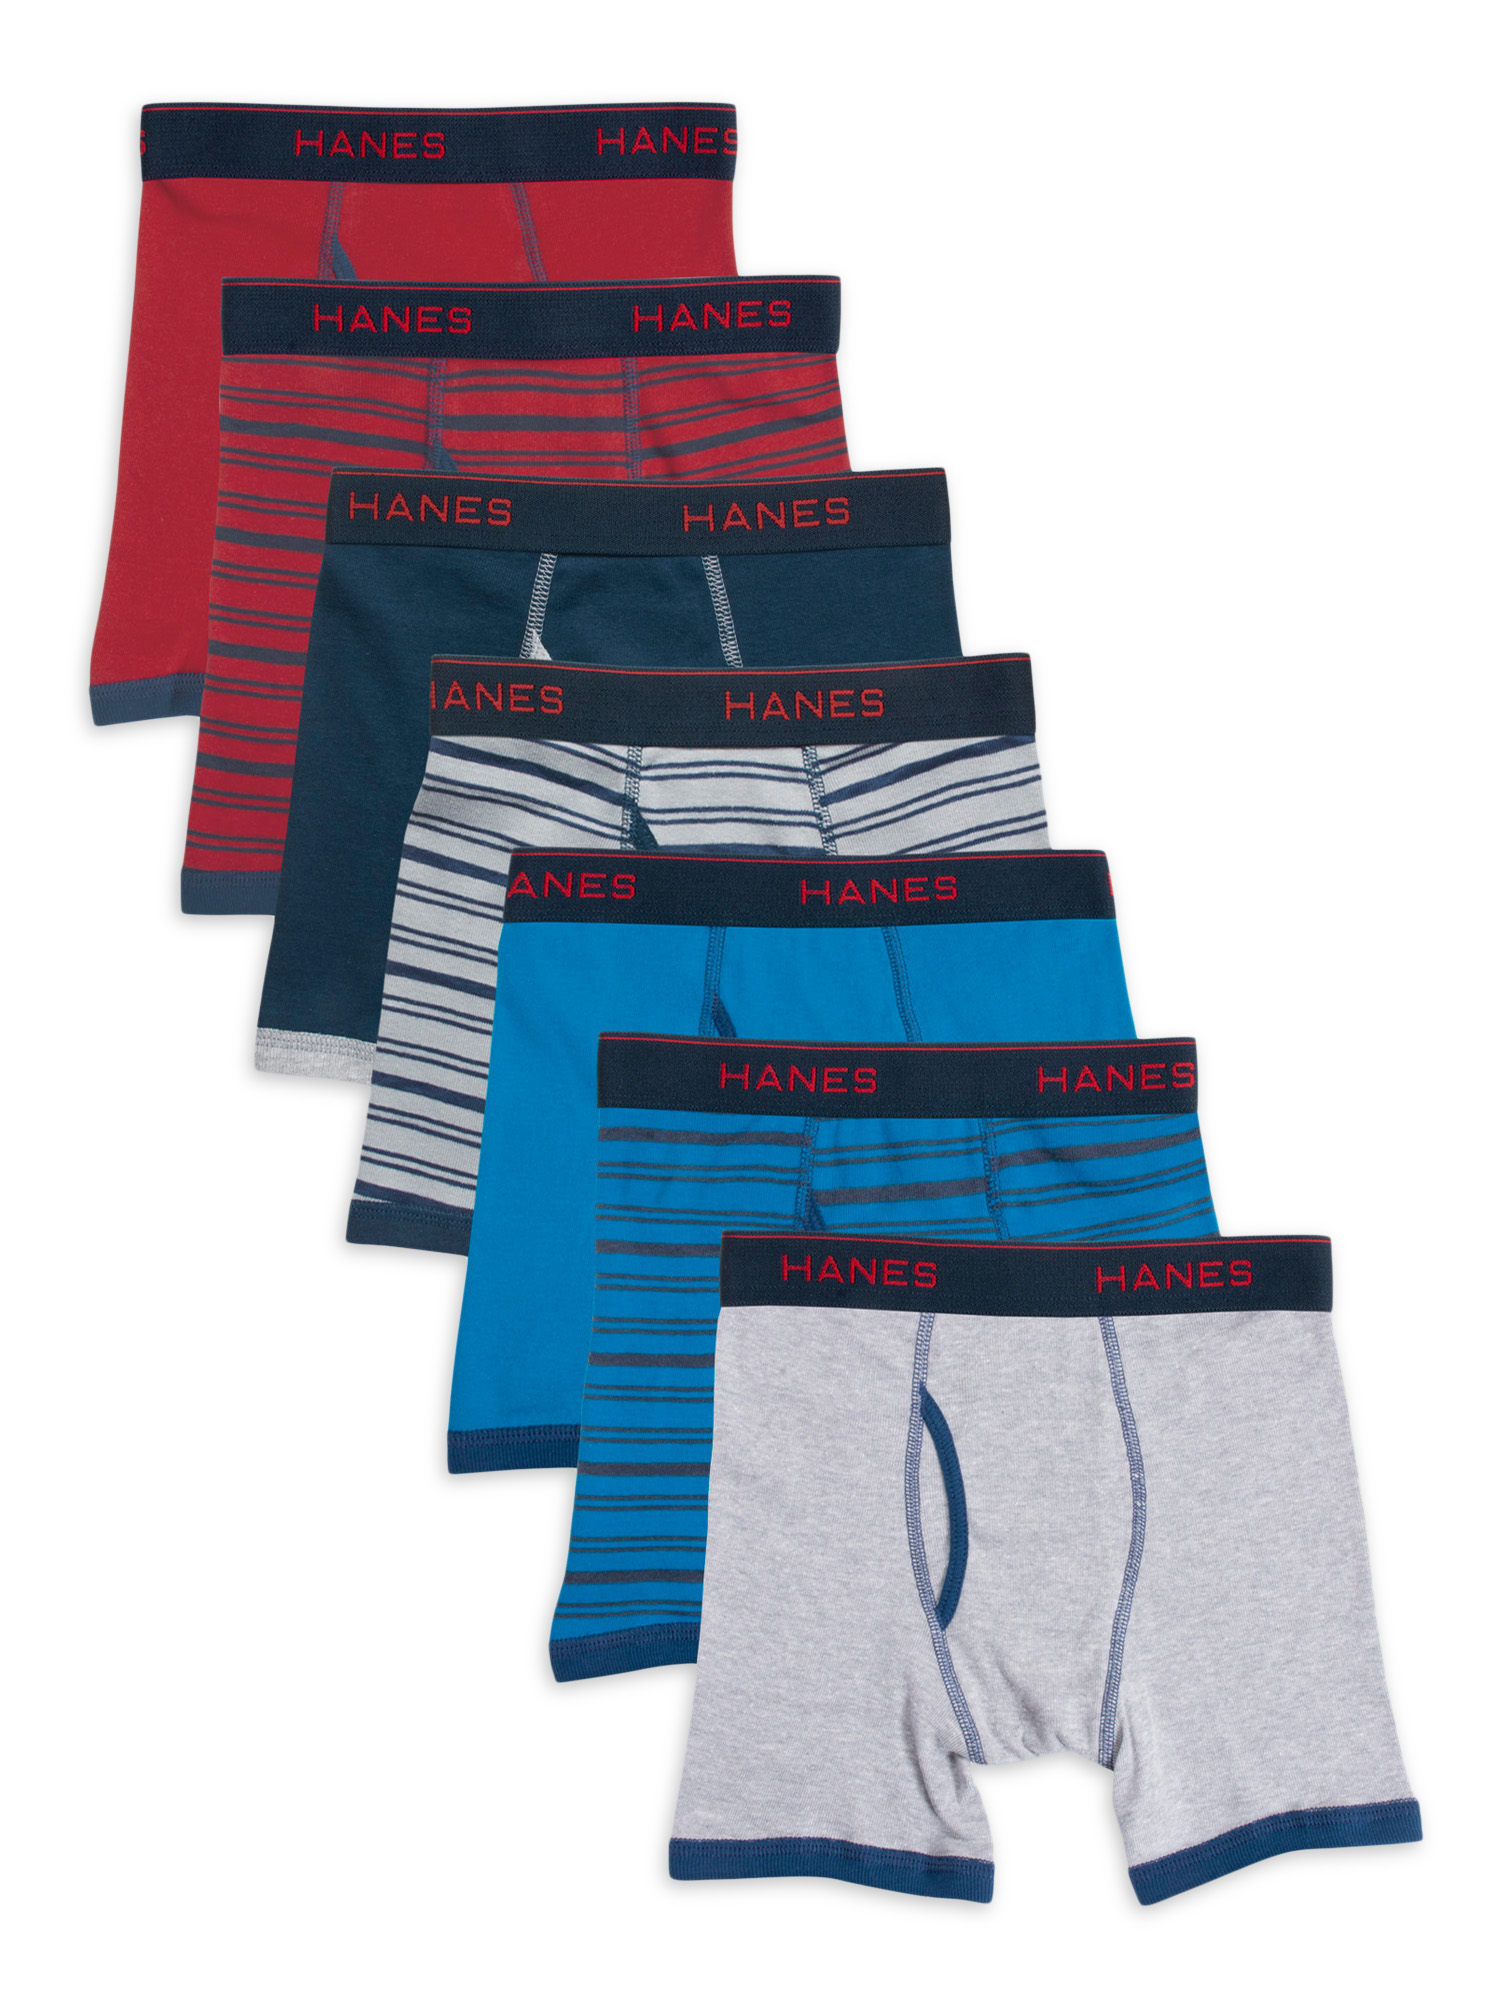 Hanes Boys Underwear, Comfort Flex Boxer Briefs, 5+2 Bonus Pack, Sizes S-XL - image 1 of 4